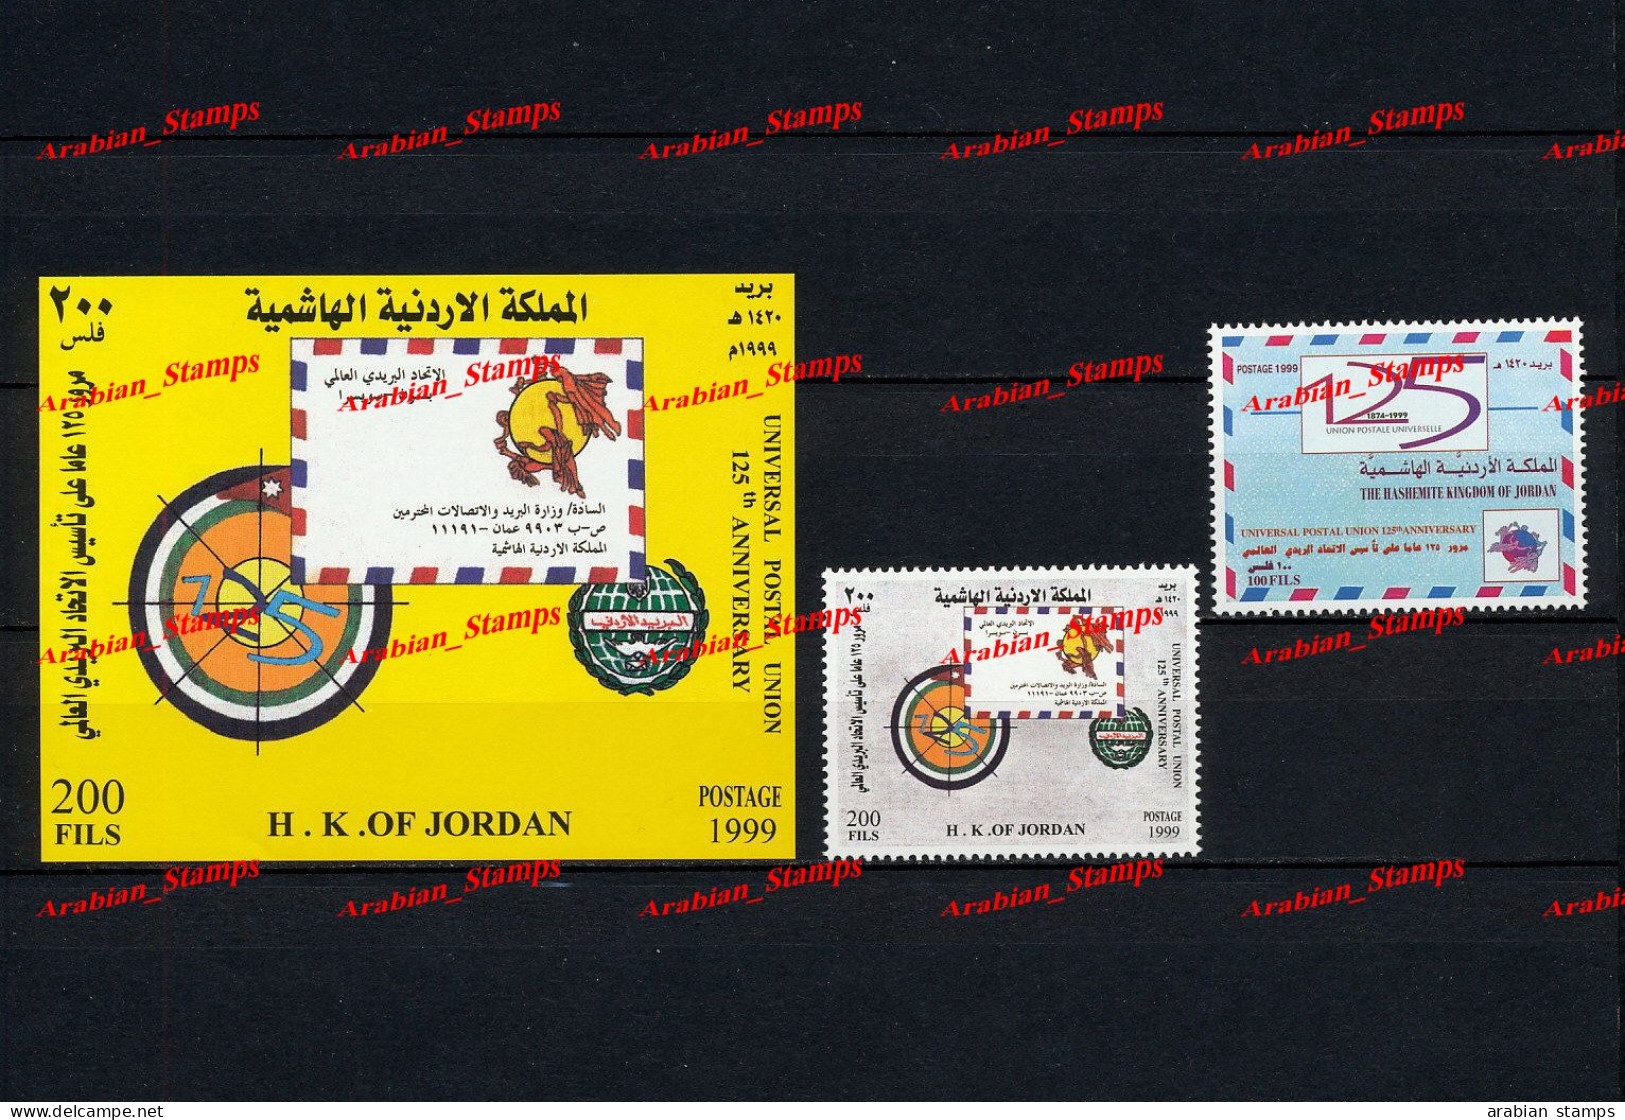 HASHIMATE KINGDOM OF JORDAN JORDANIE 1999 MINT MNH MS SHEET SS 125TH ANNIVERSARY UNIVERSAL POSTAL UNION UPU EMBLEM POST - Jordan